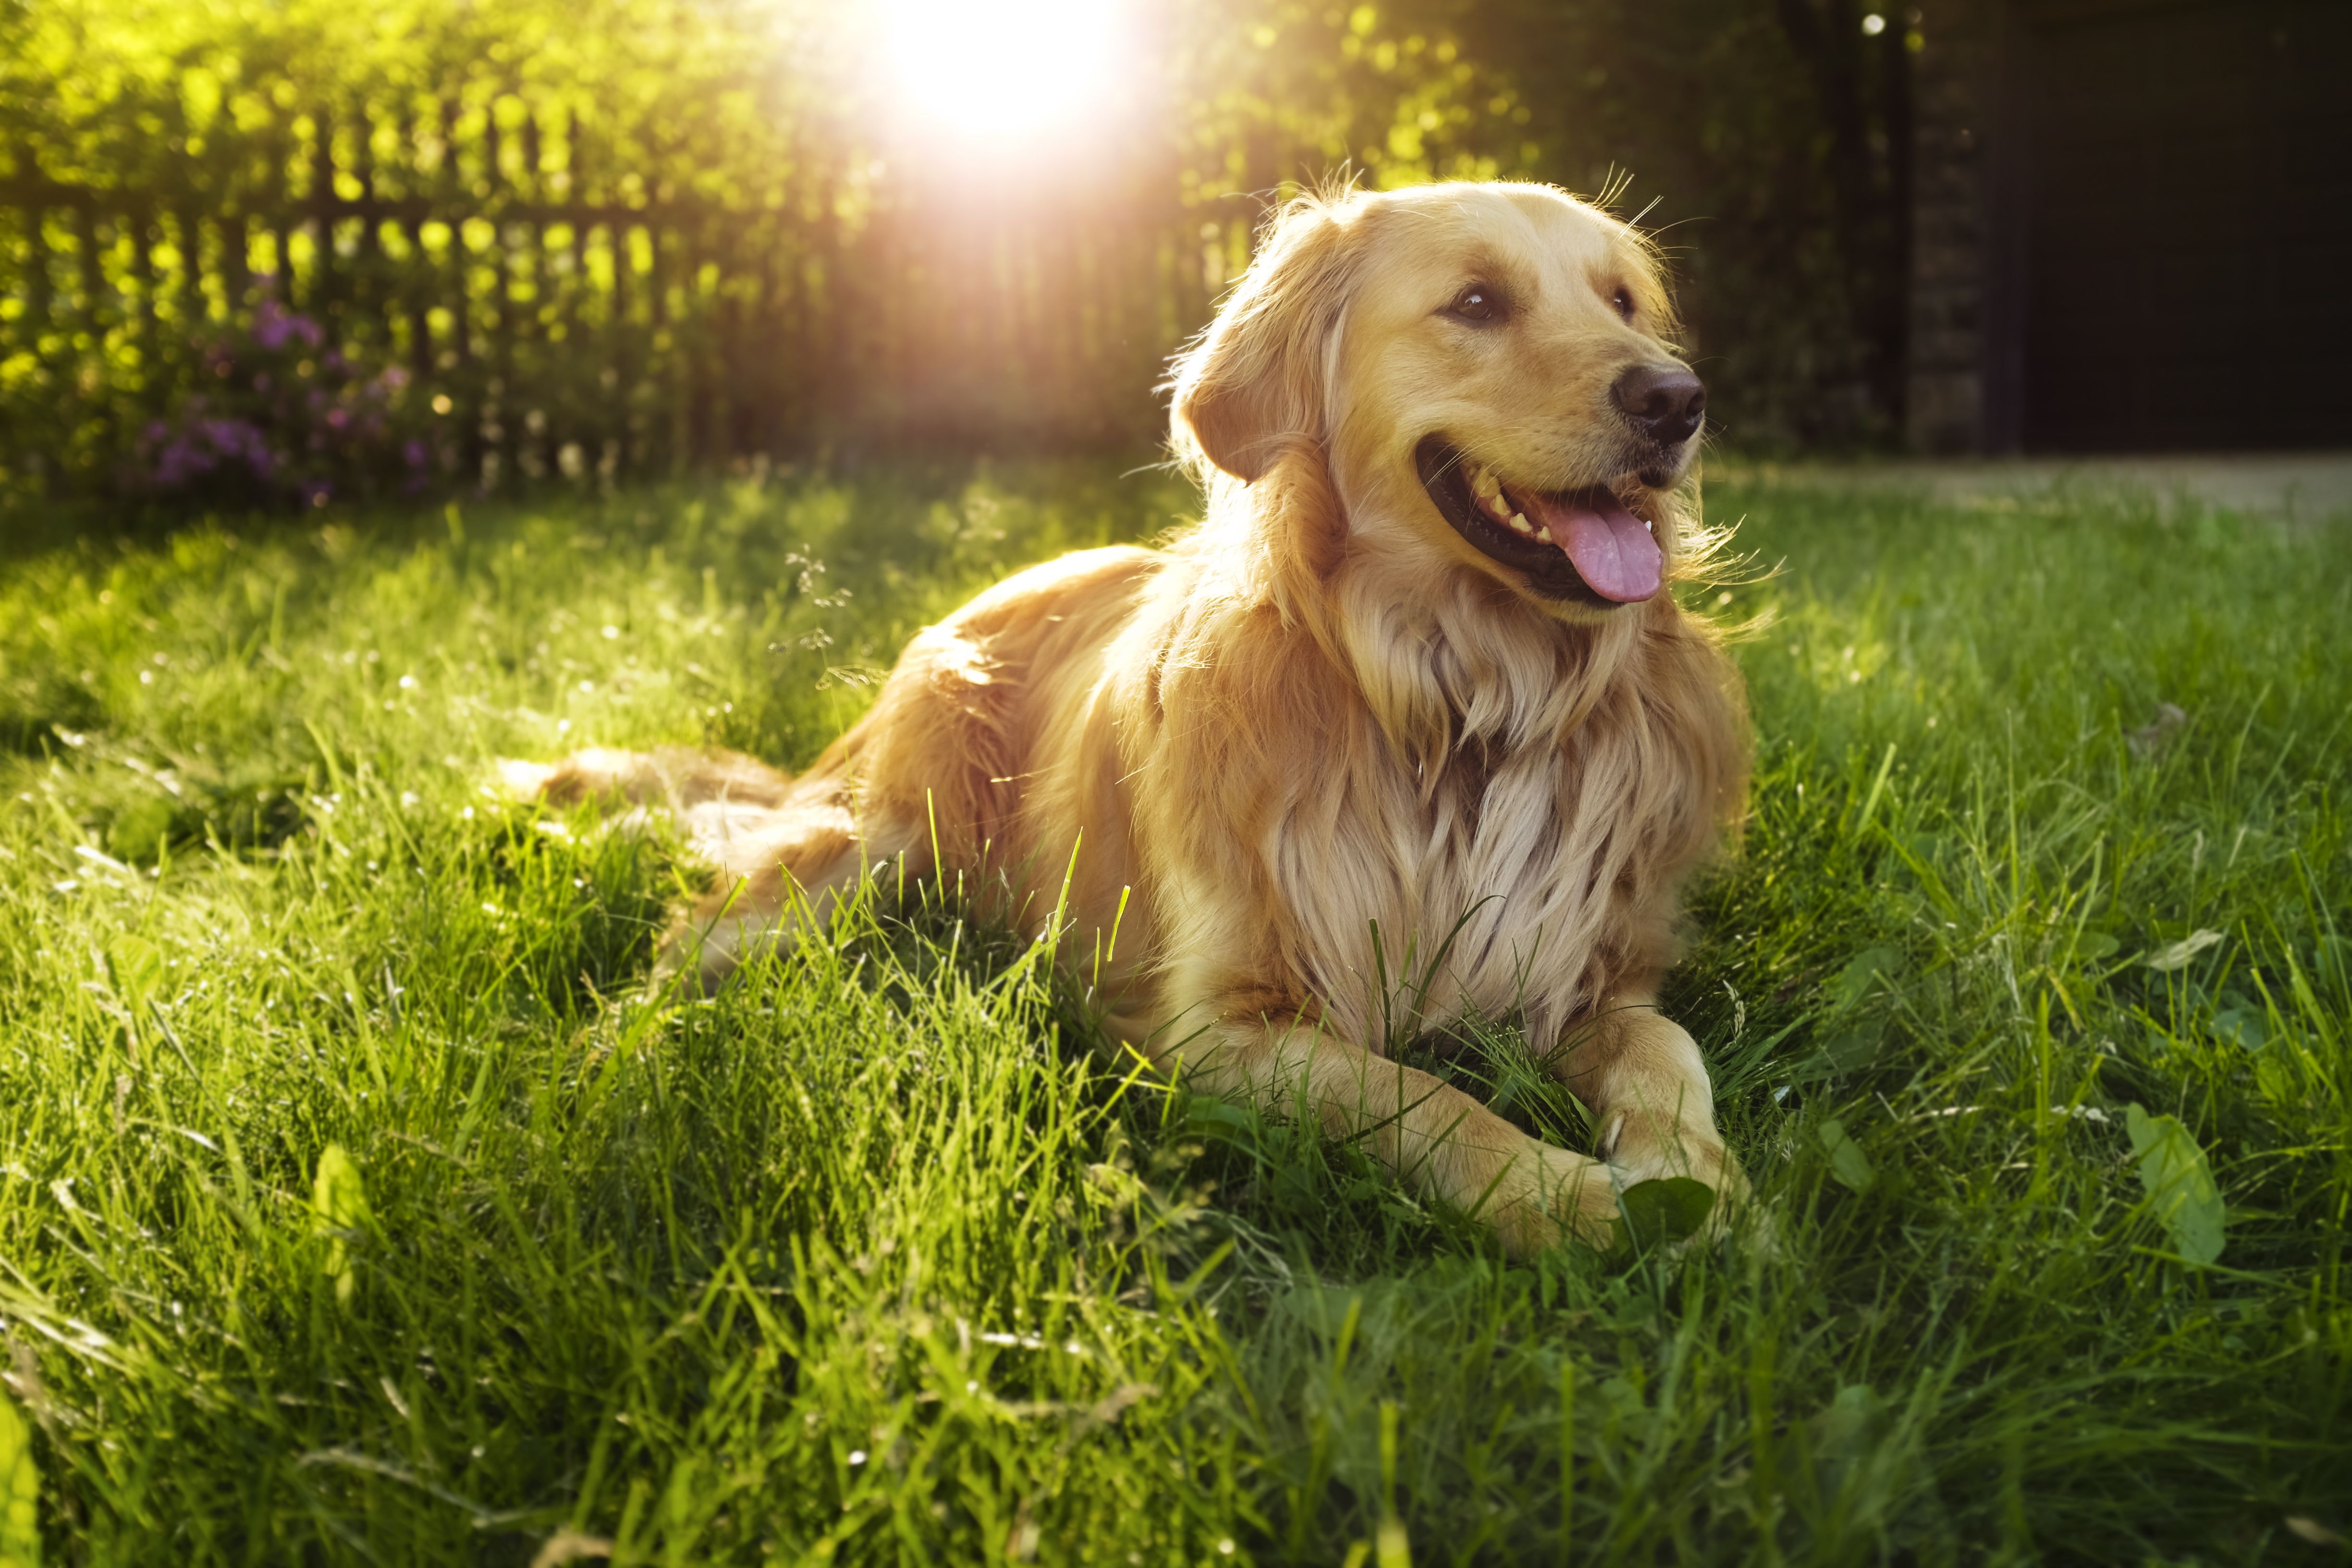 IV. Characteristics and Traits of Large Dog Breeds